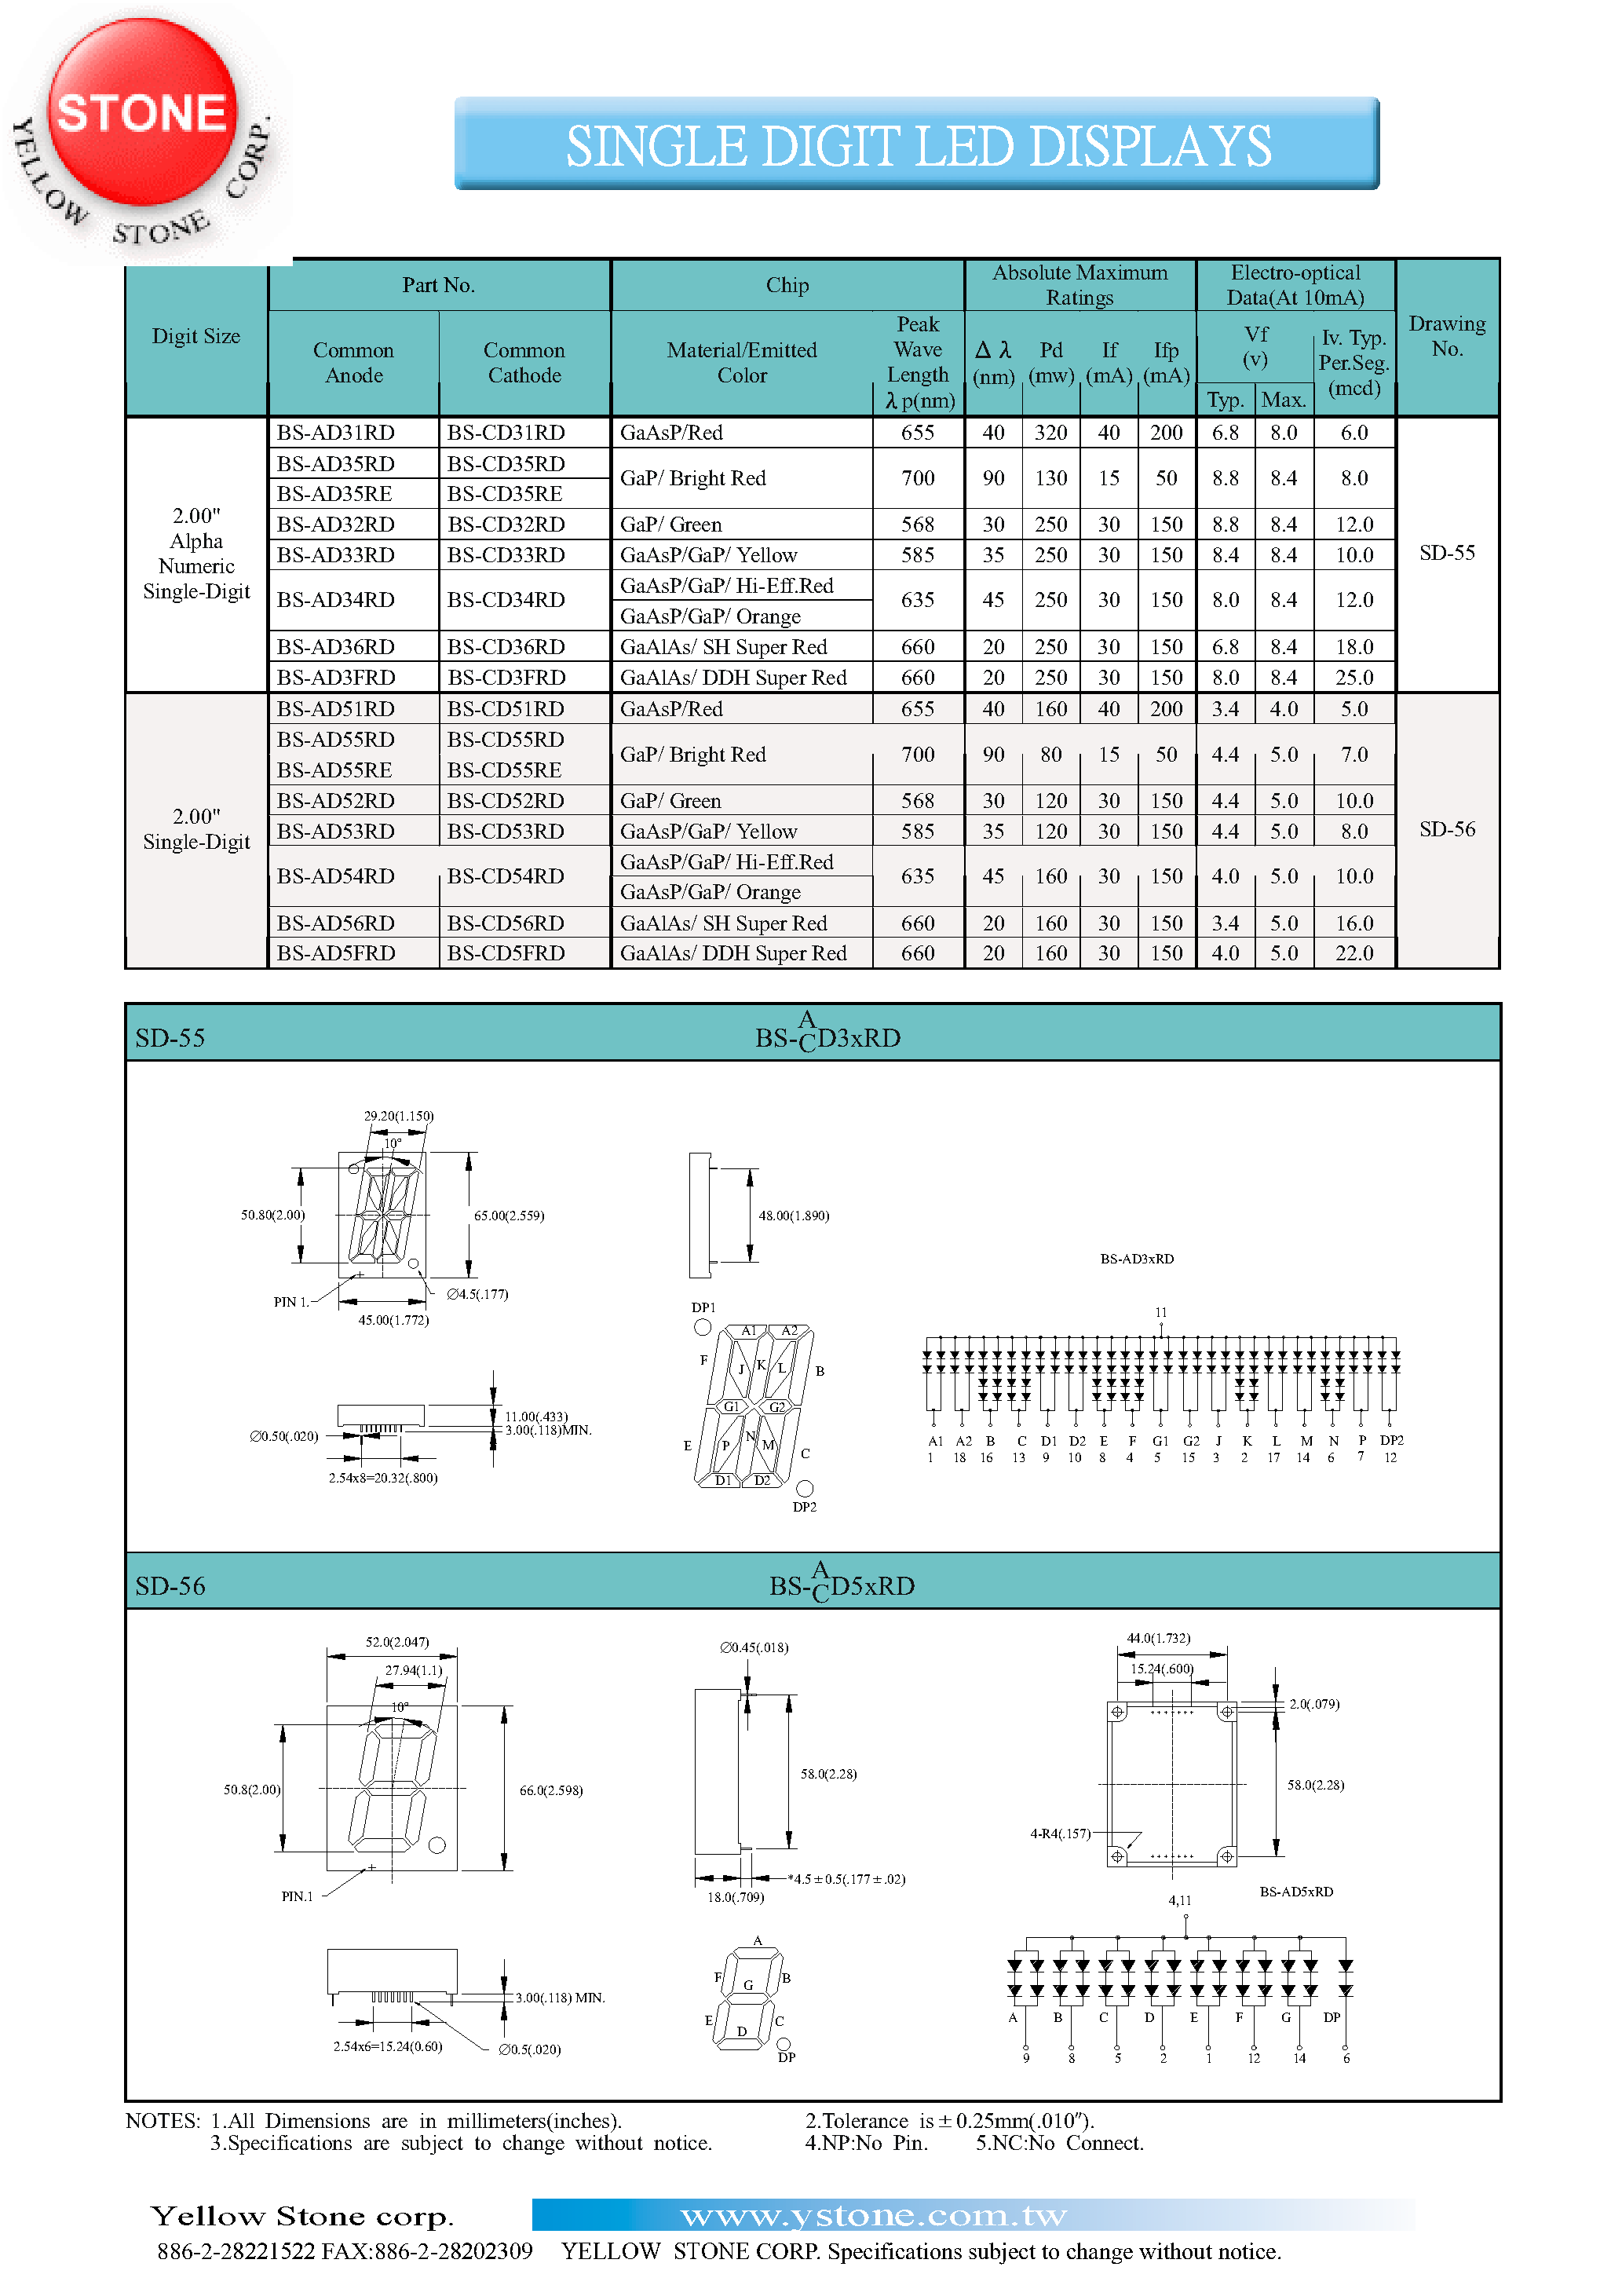 Datasheet BS-AD51RD - SINGLE DIGIT LED DISPLAYS page 1